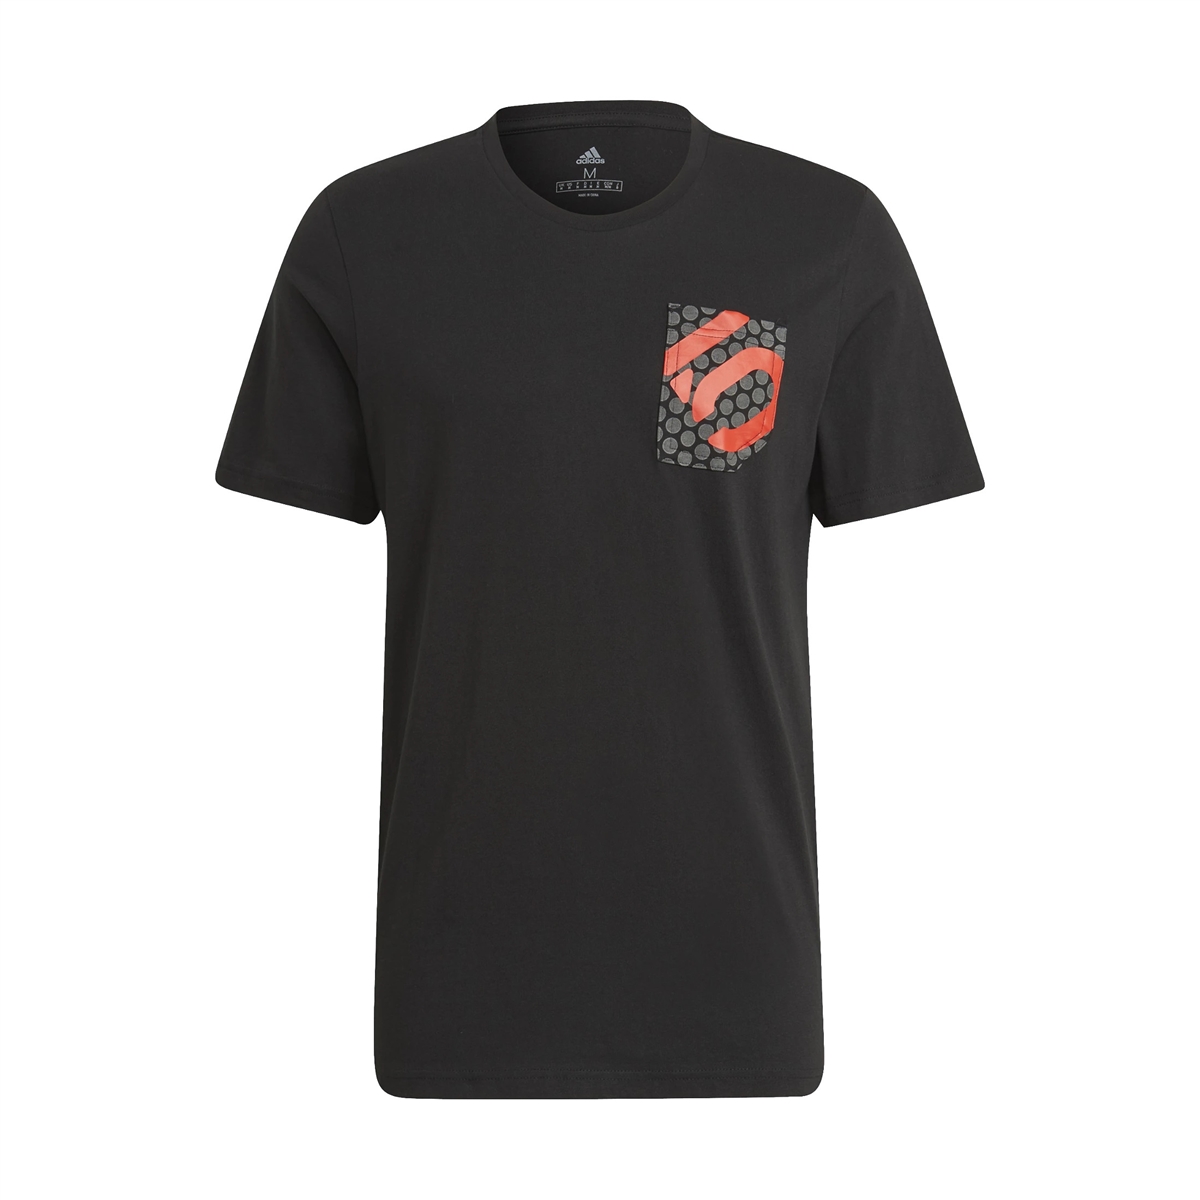 5.10 BOTB Brand of The Brave Camiseta Negra 2021 Talla XL